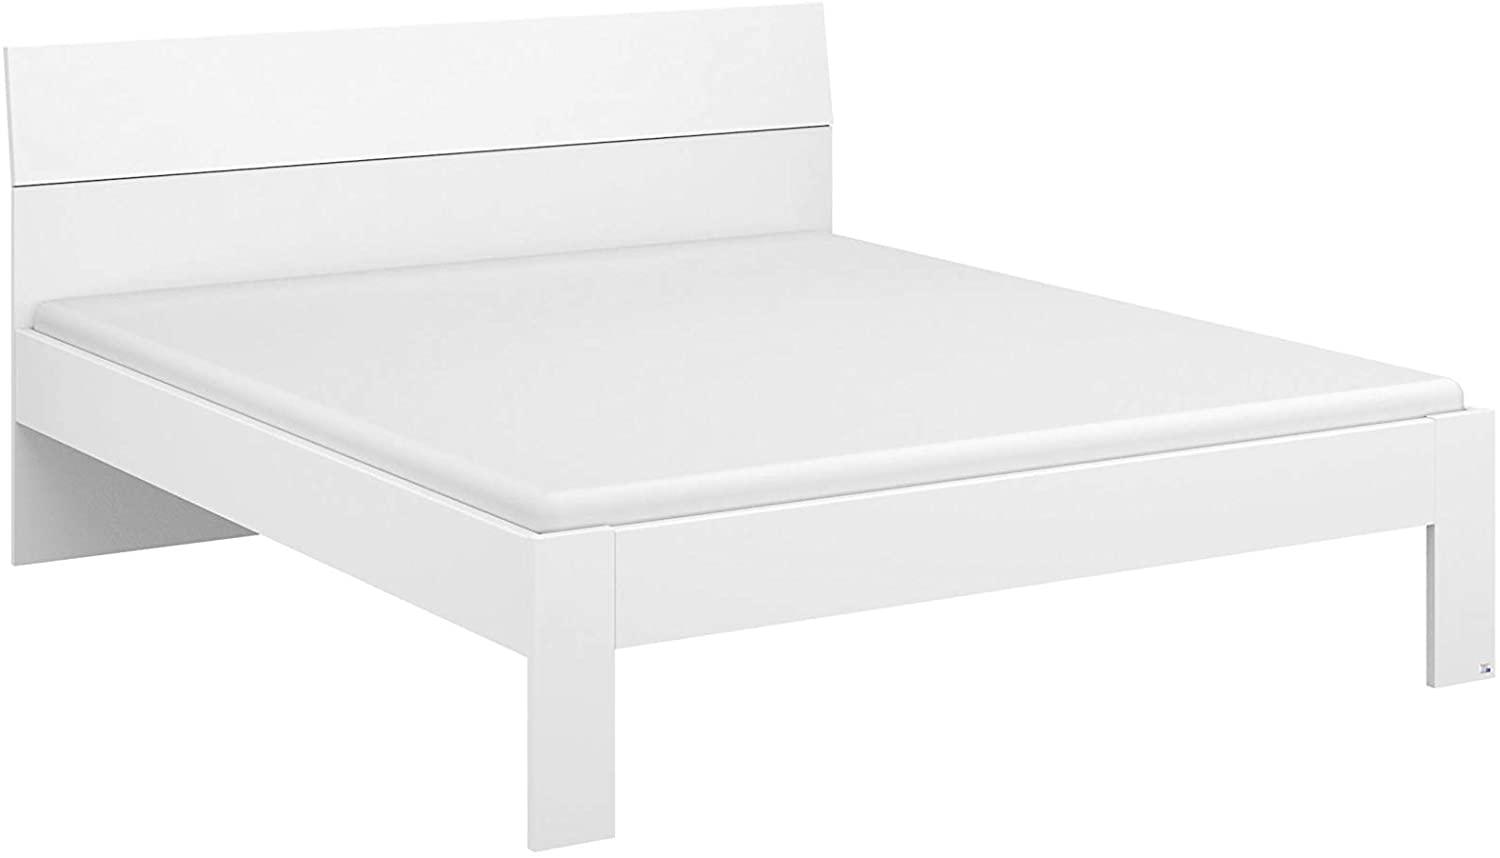 Rauch Möbel Flexx Bett Doppelbett Futonbett in Weiß Liegefläche 160 x 200 cm Gesamtmaße Bett BxHxT 165 x 90 x 209 cm Bild 1